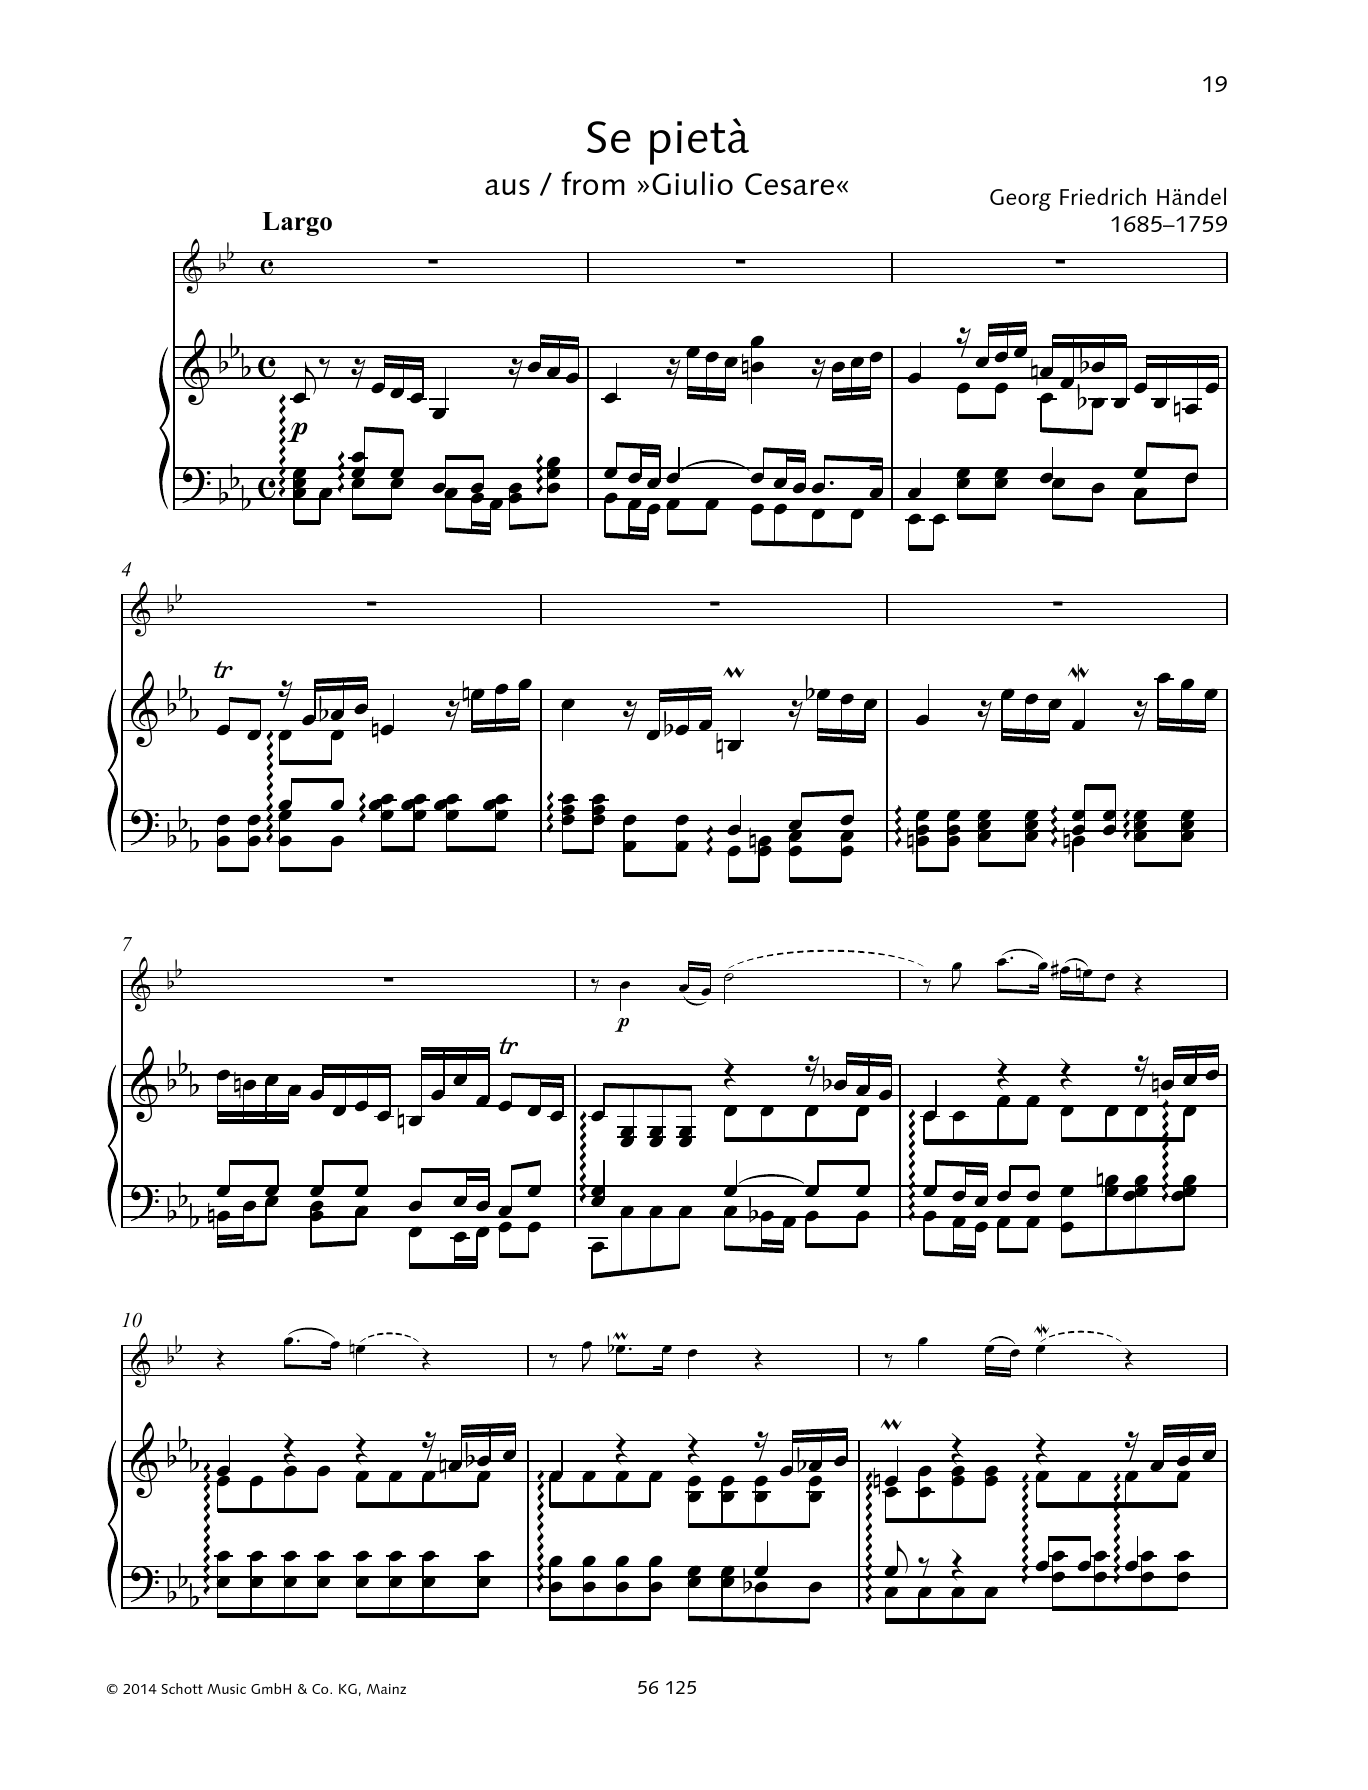 Download George Frideric Handel Se pietà Sheet Music